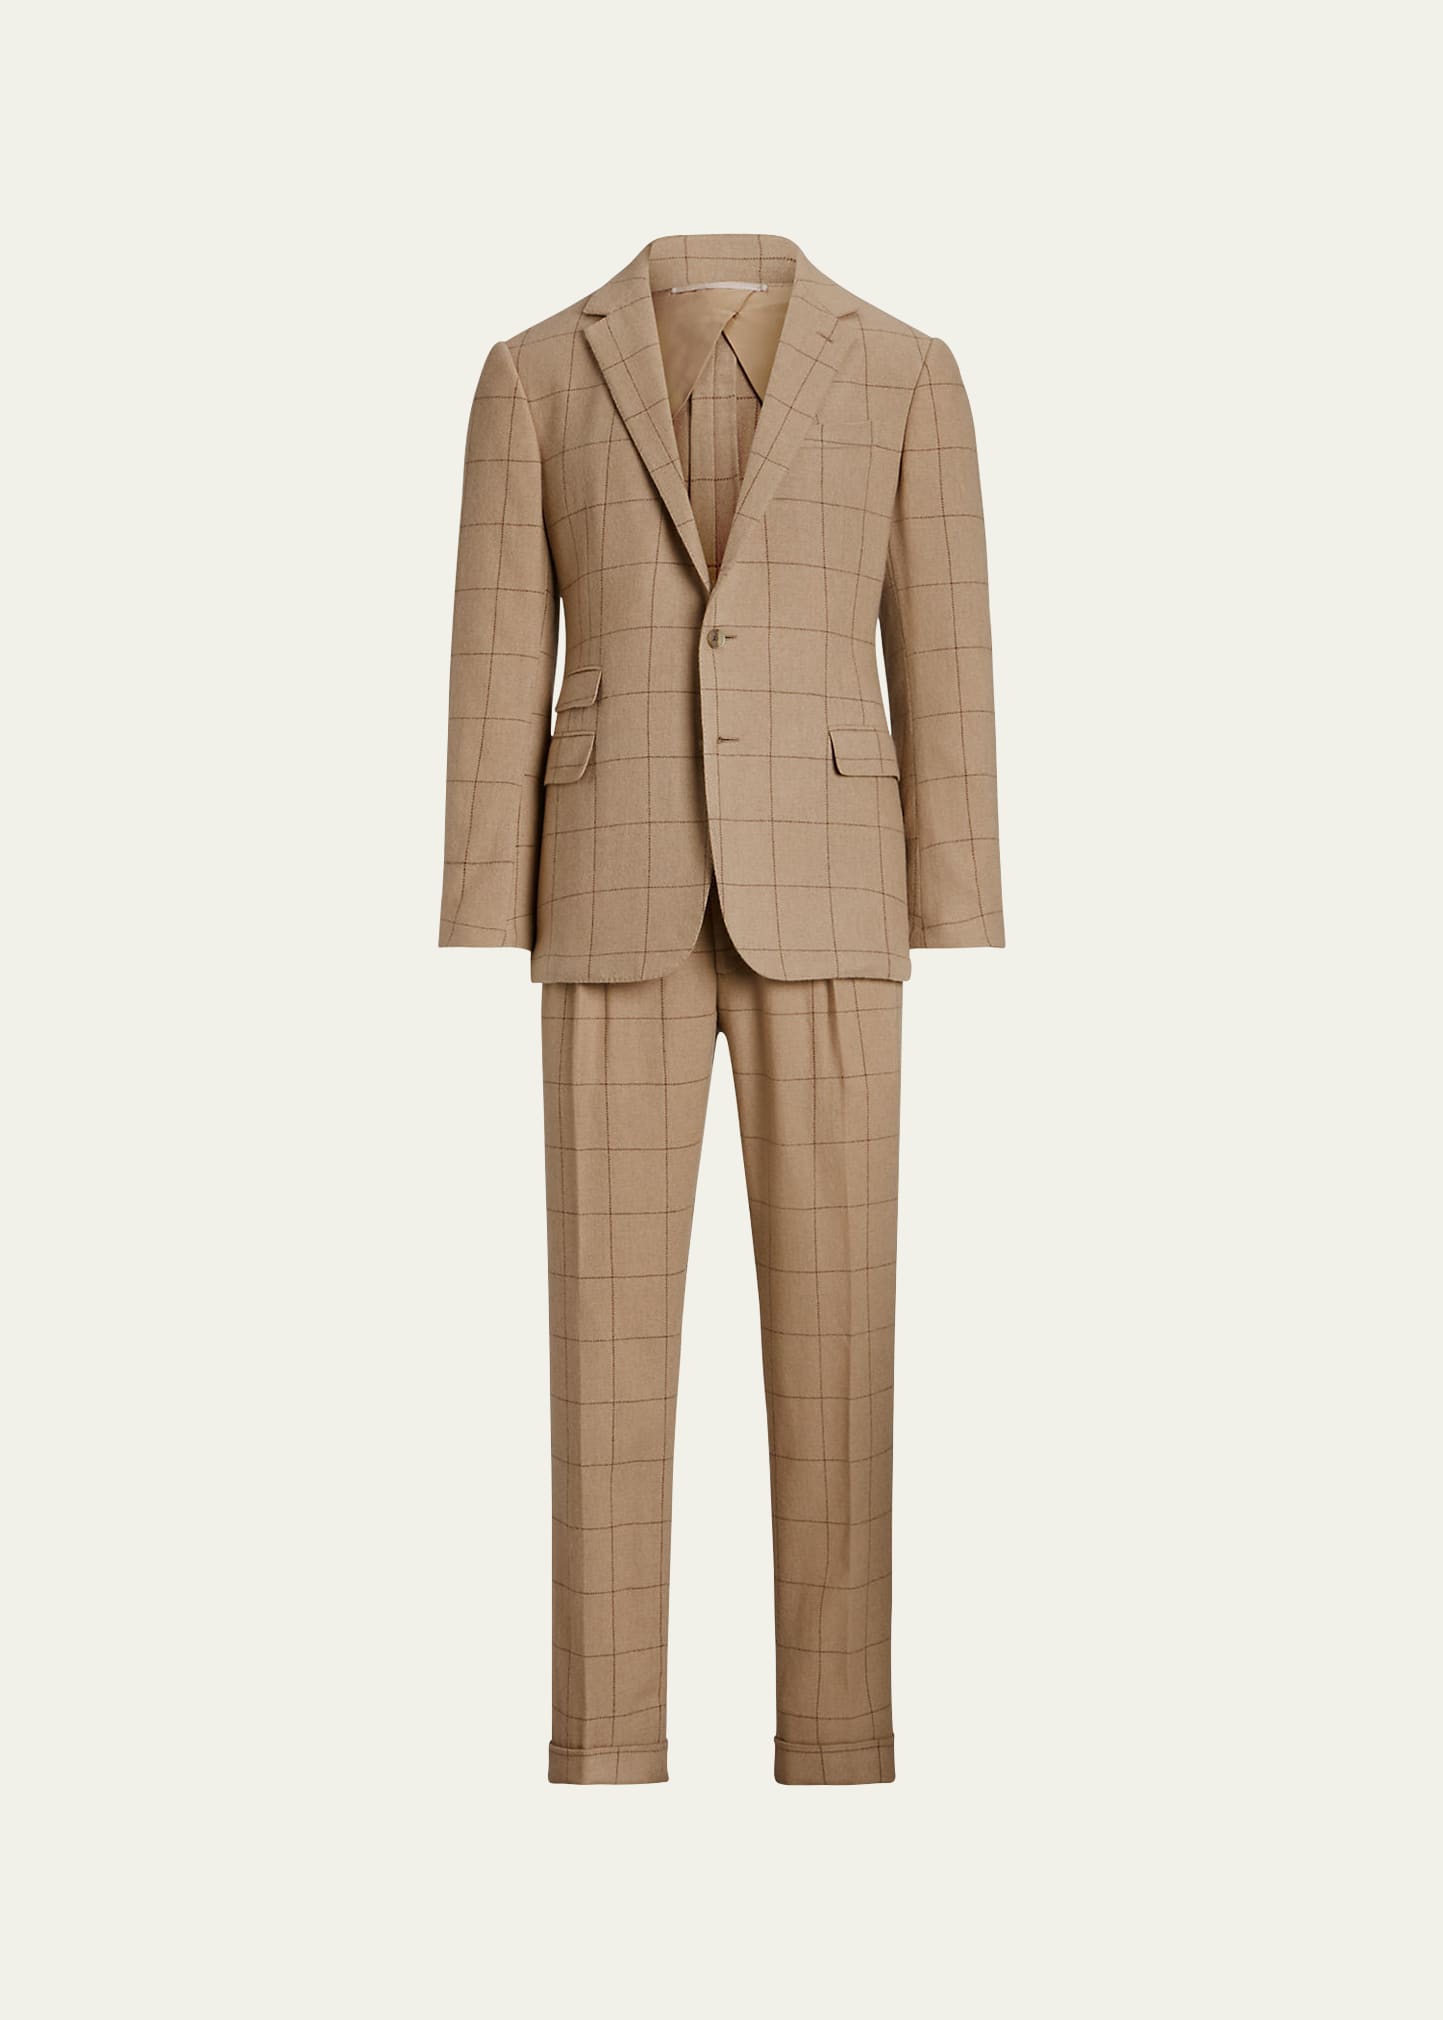 Ralph Lauren Men's Kent Classic Windowpane Cashmere Suit In Taubrwn